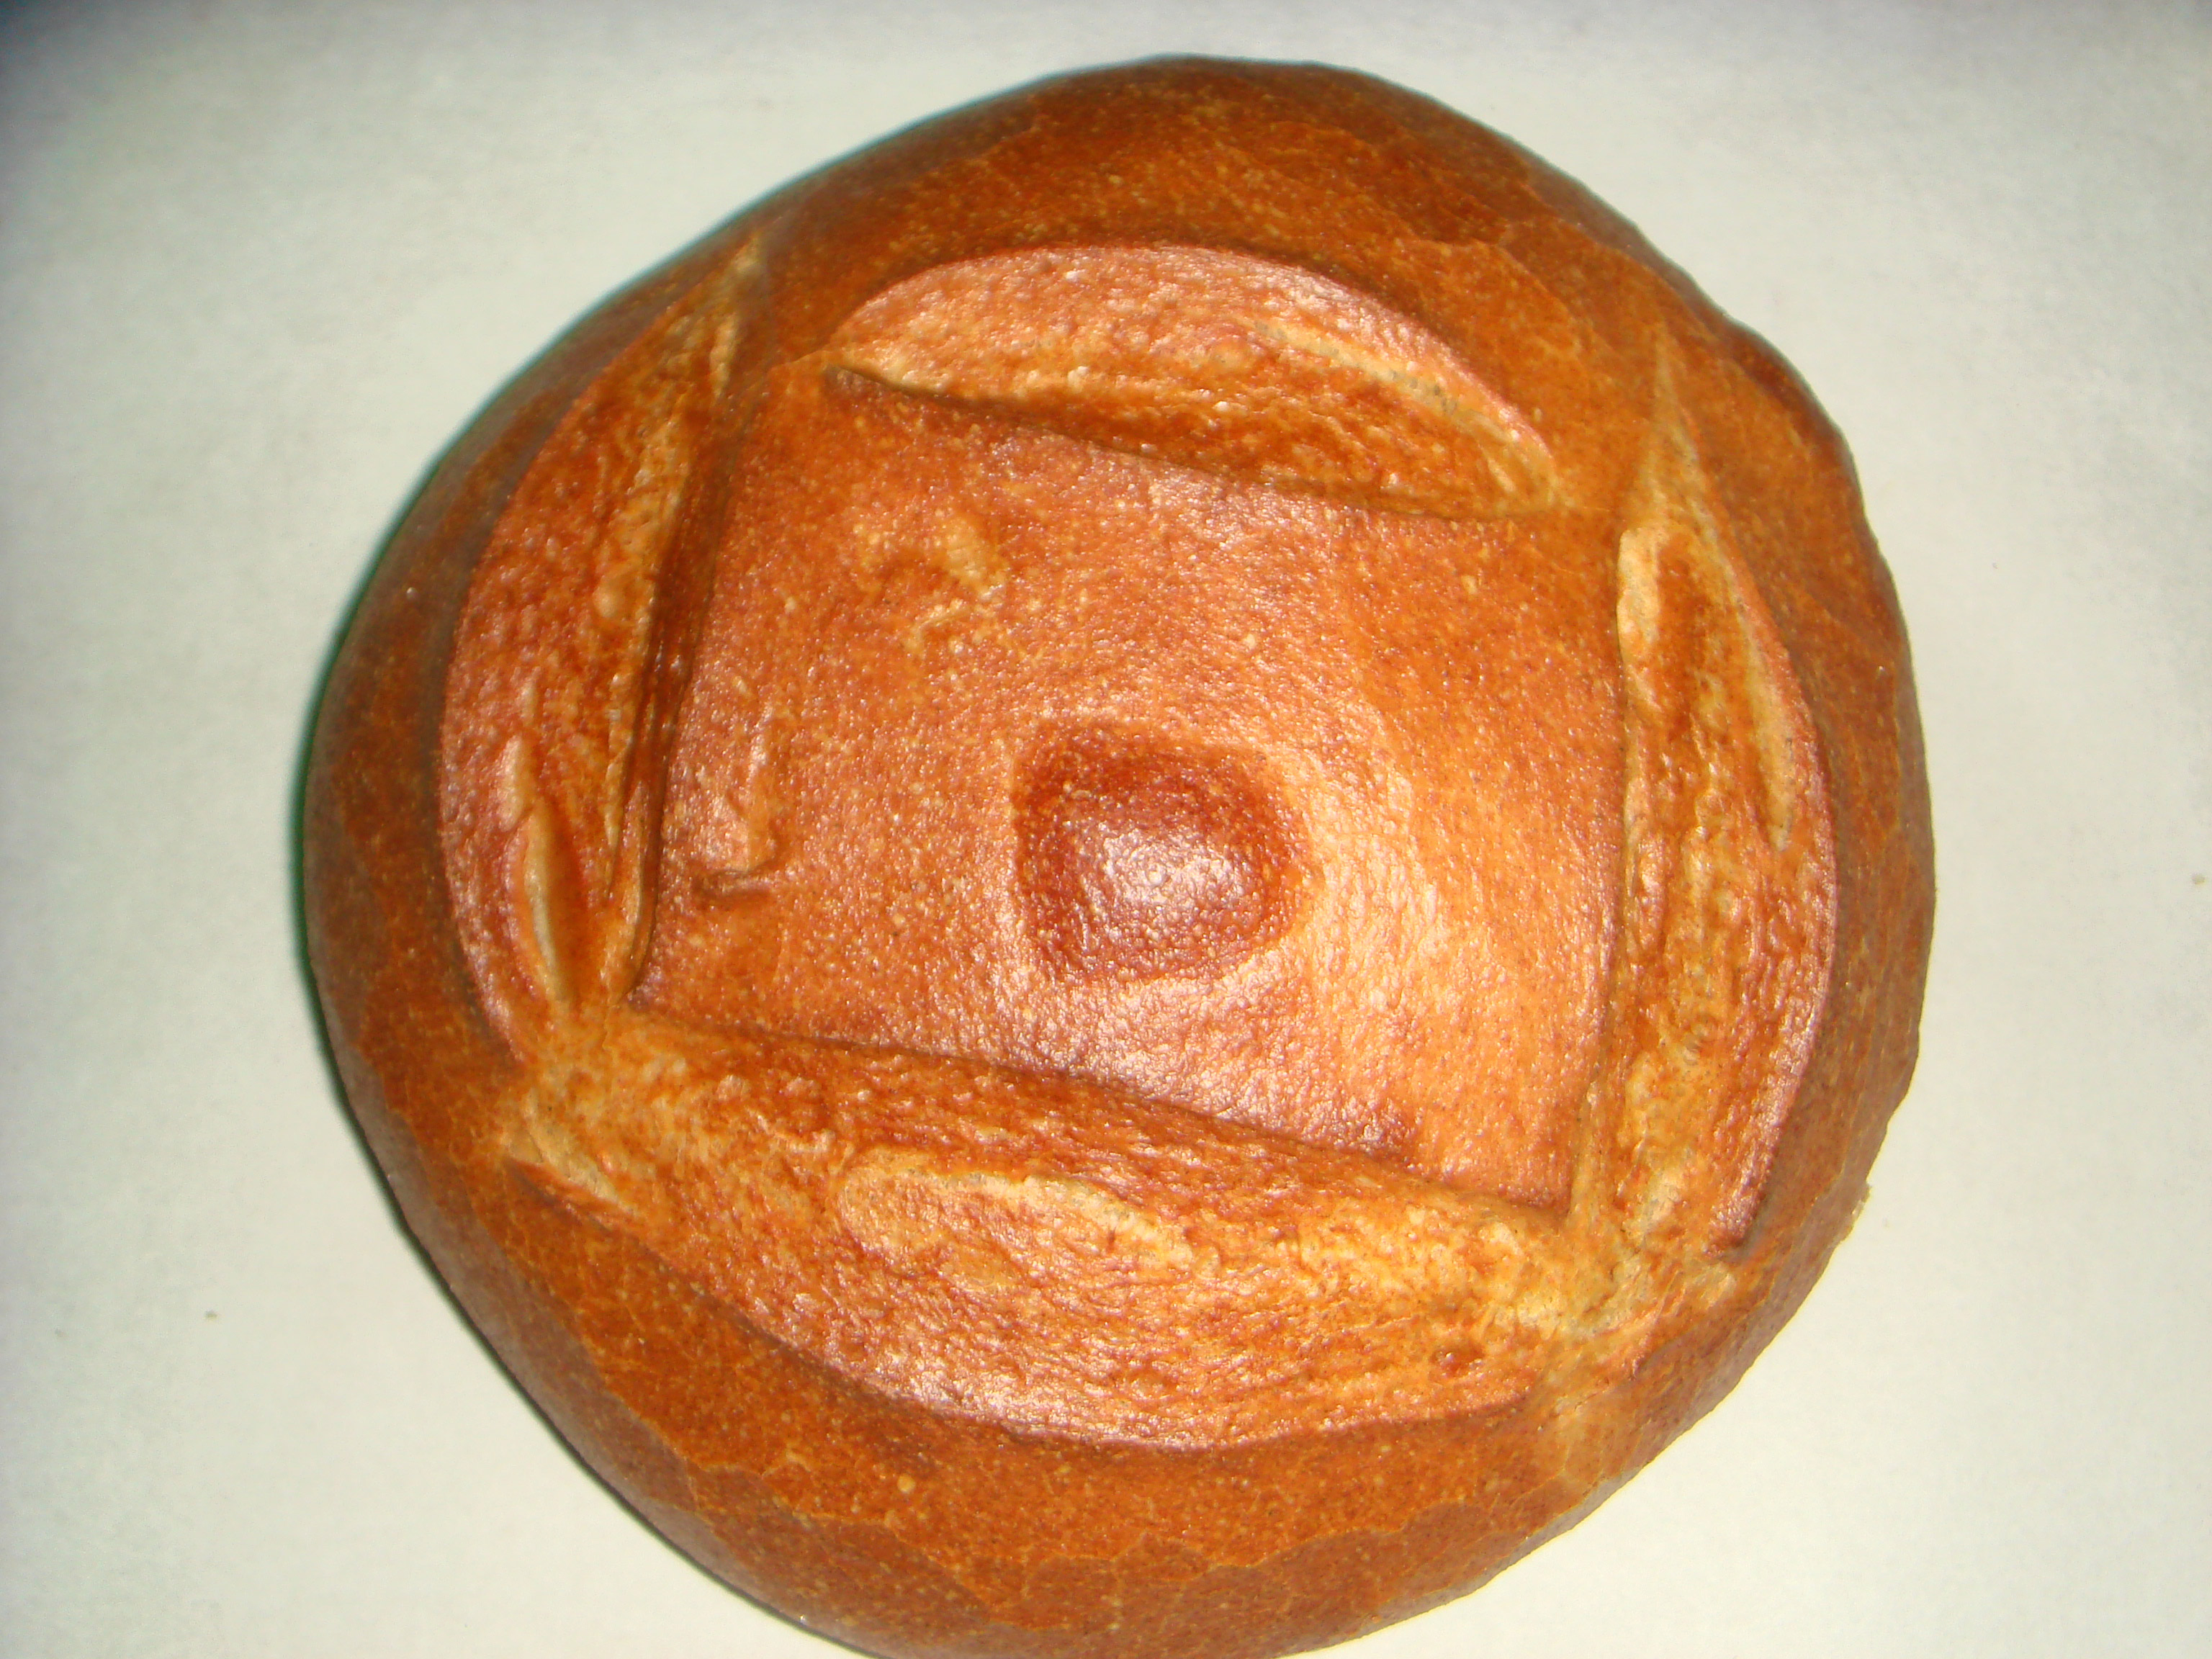 CSB Bread